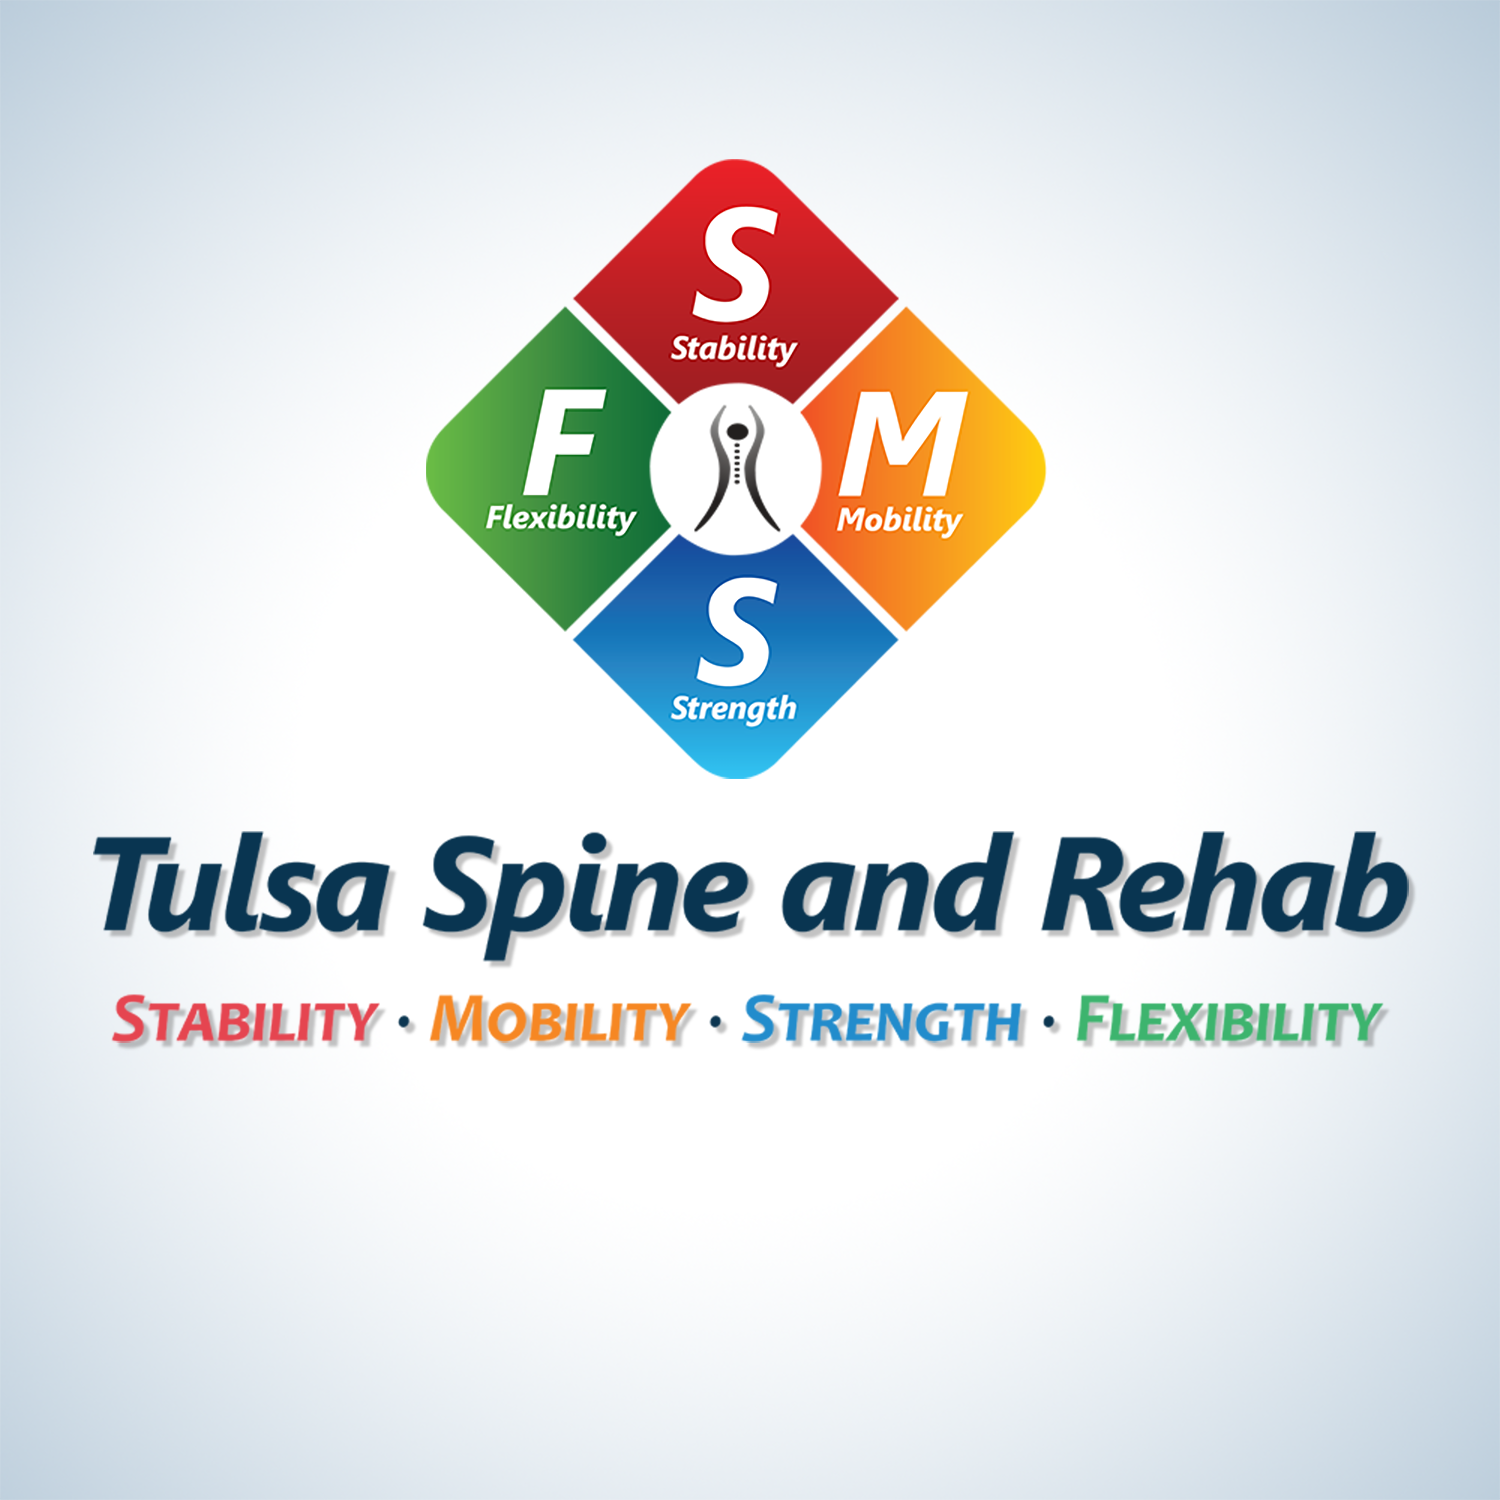 Tulsa Spine and Rehab